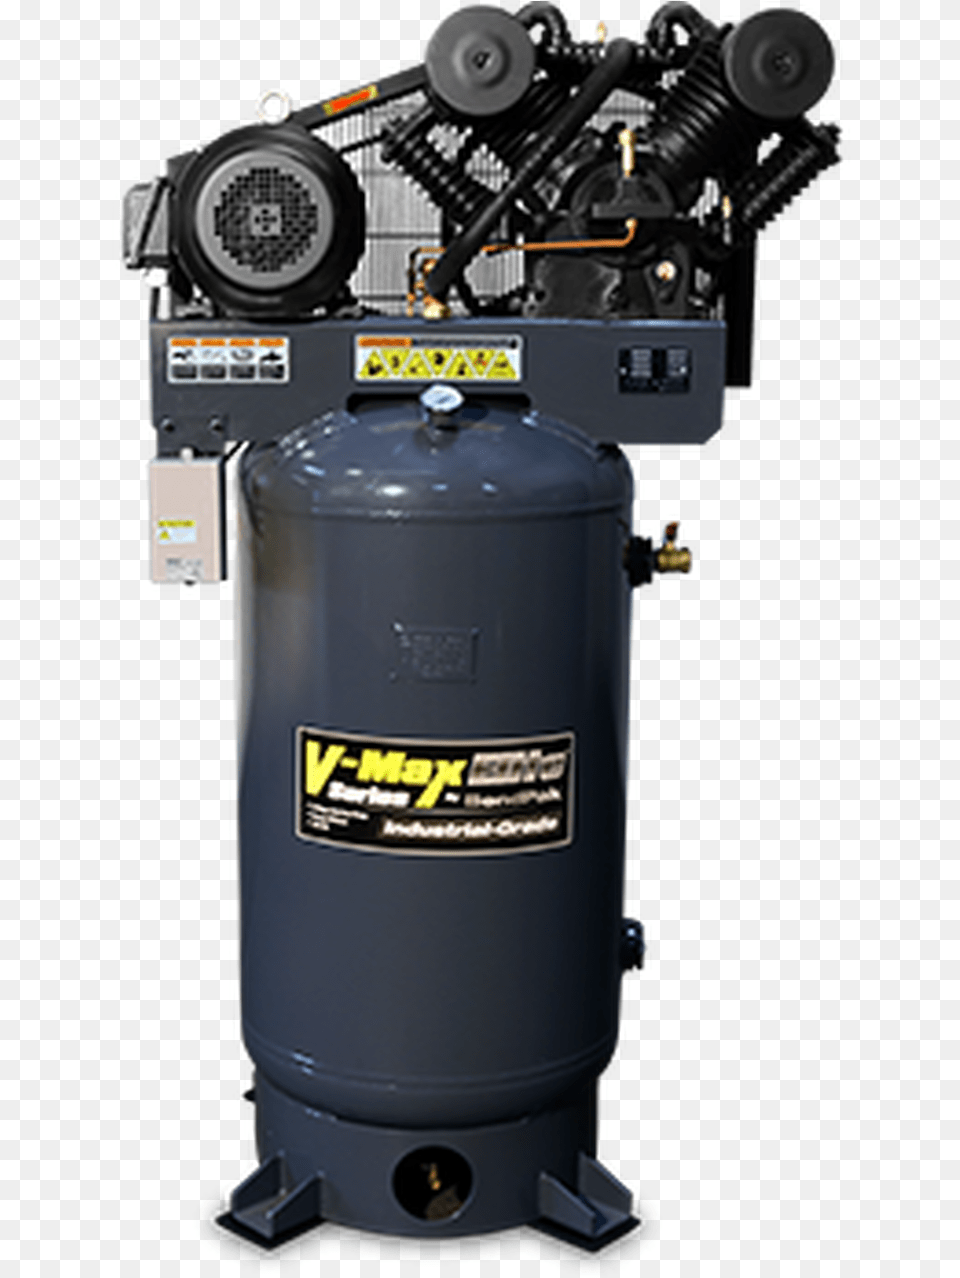 Bendpak V Max Elite Auto Shop Air Compressor, Machine Free Png Download